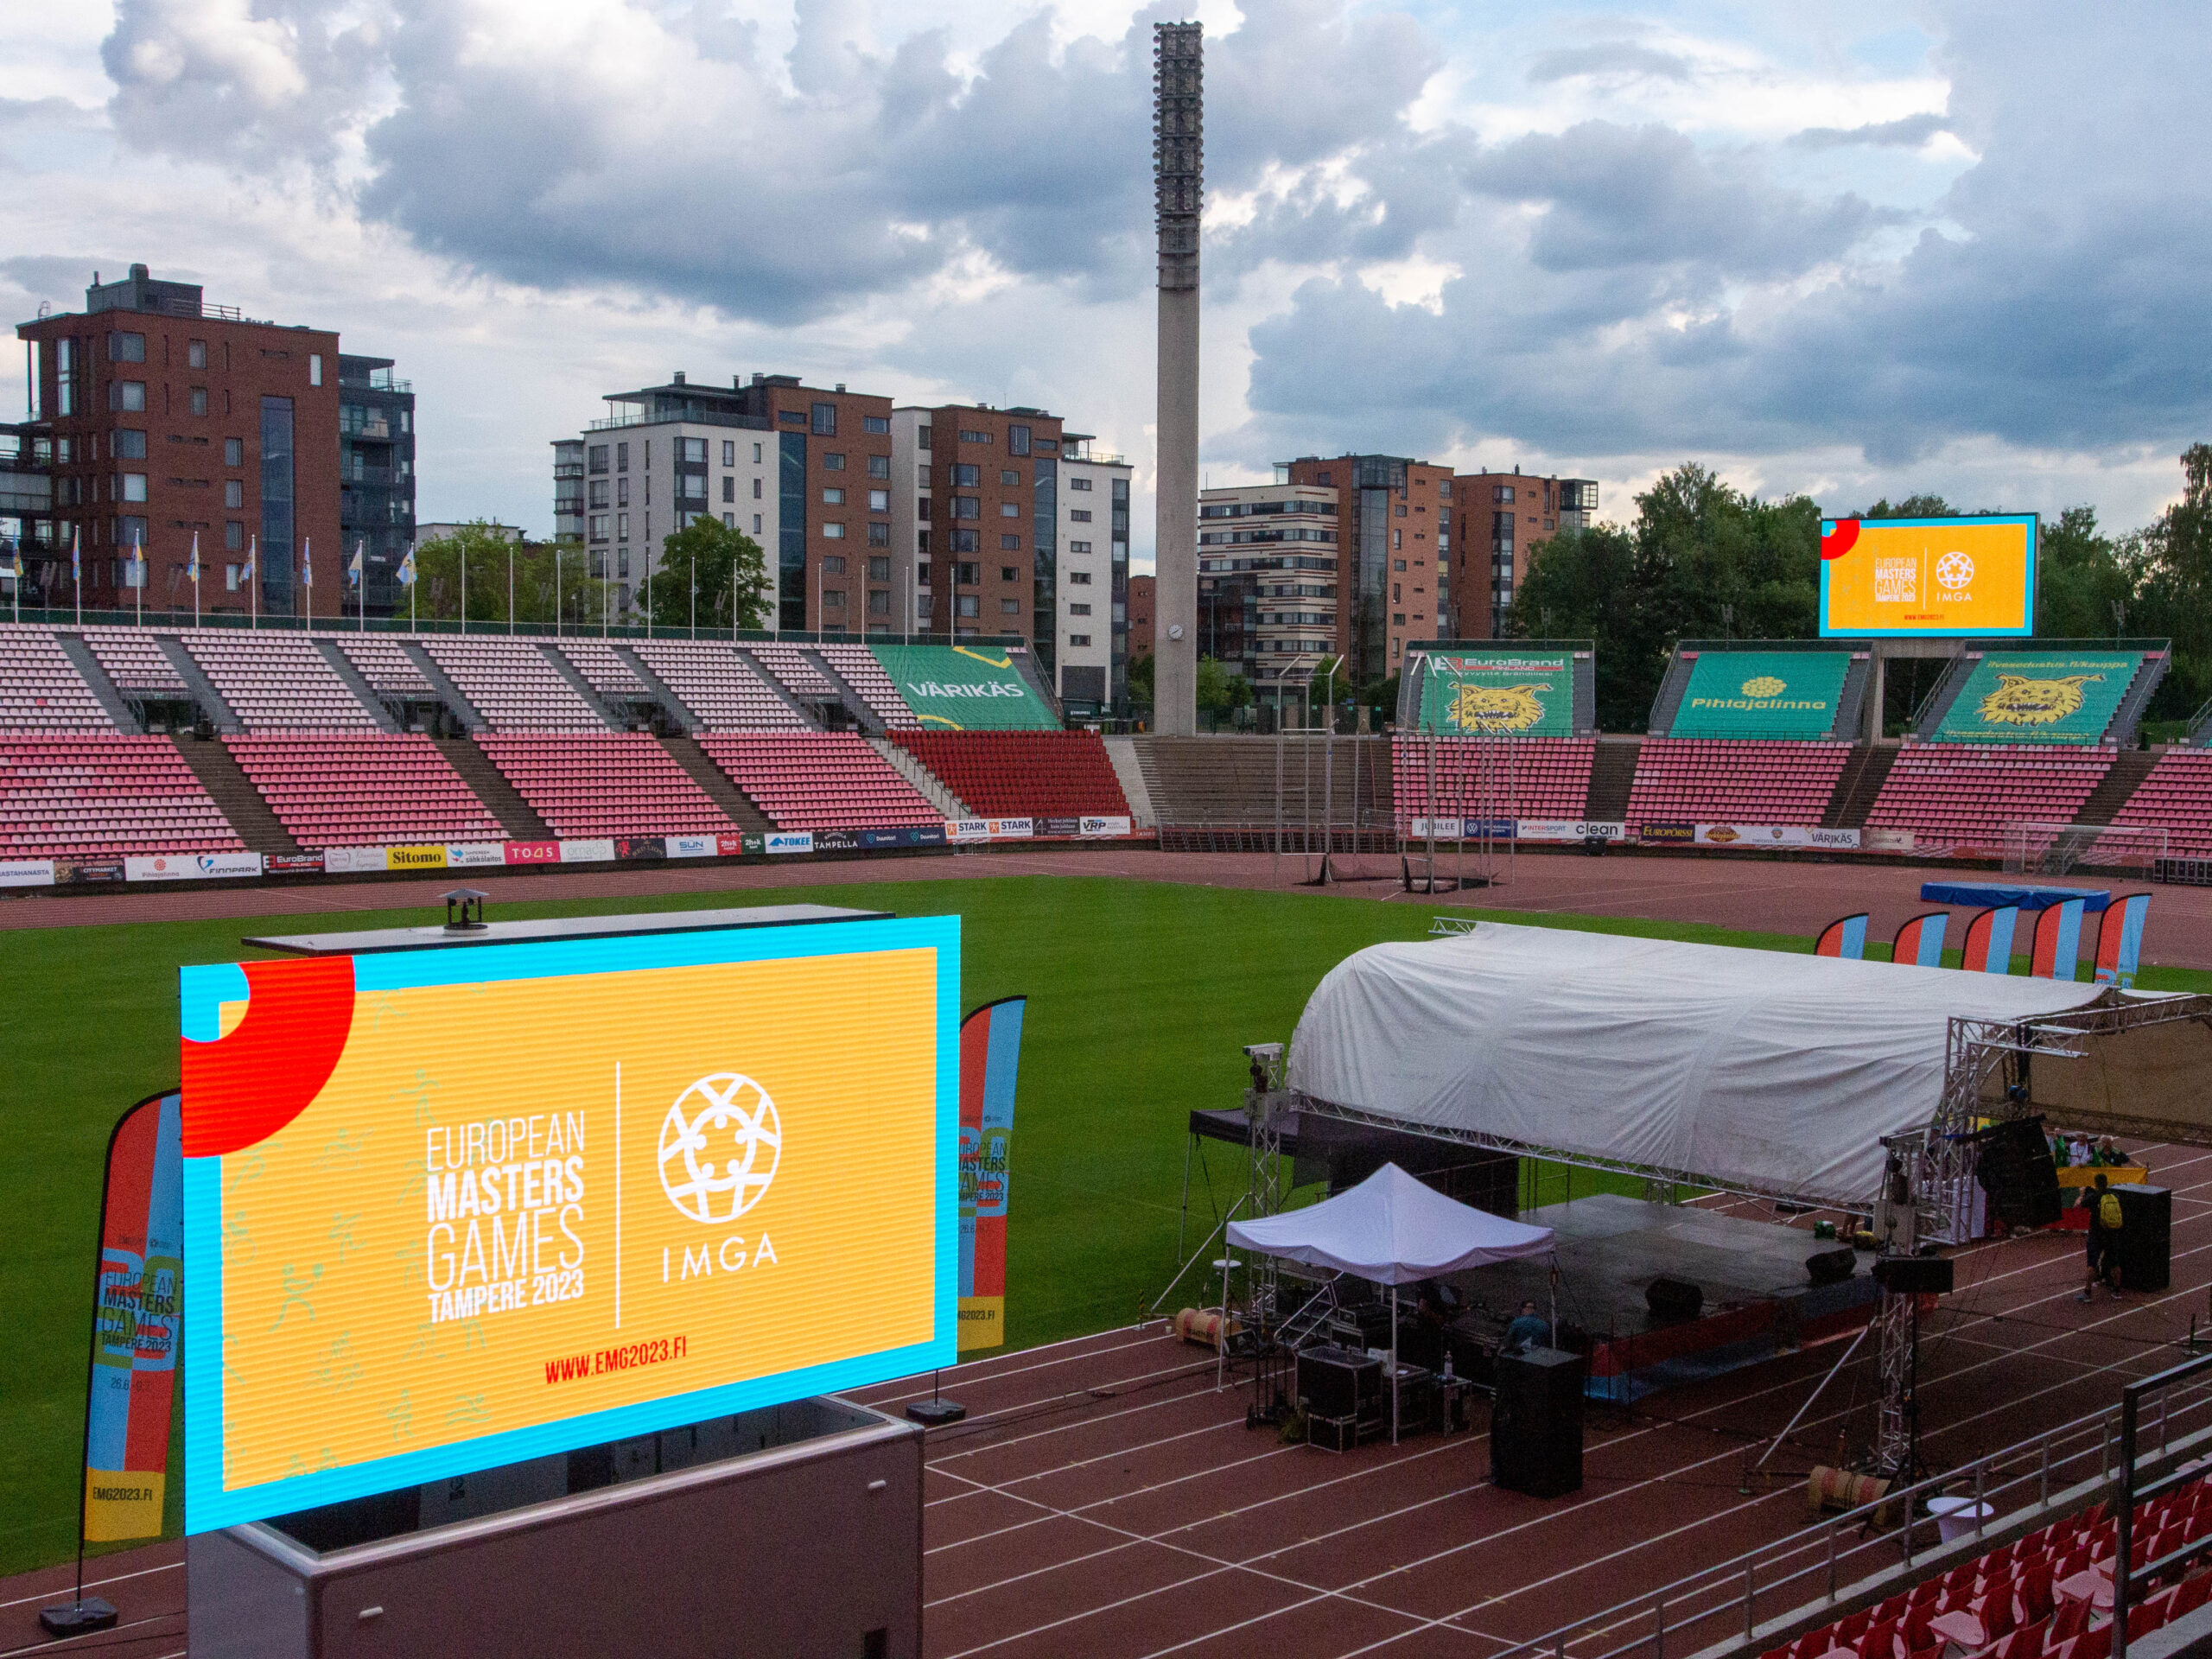 Screen-shots at Ratina Stadium – European Masters Games opening ceremony